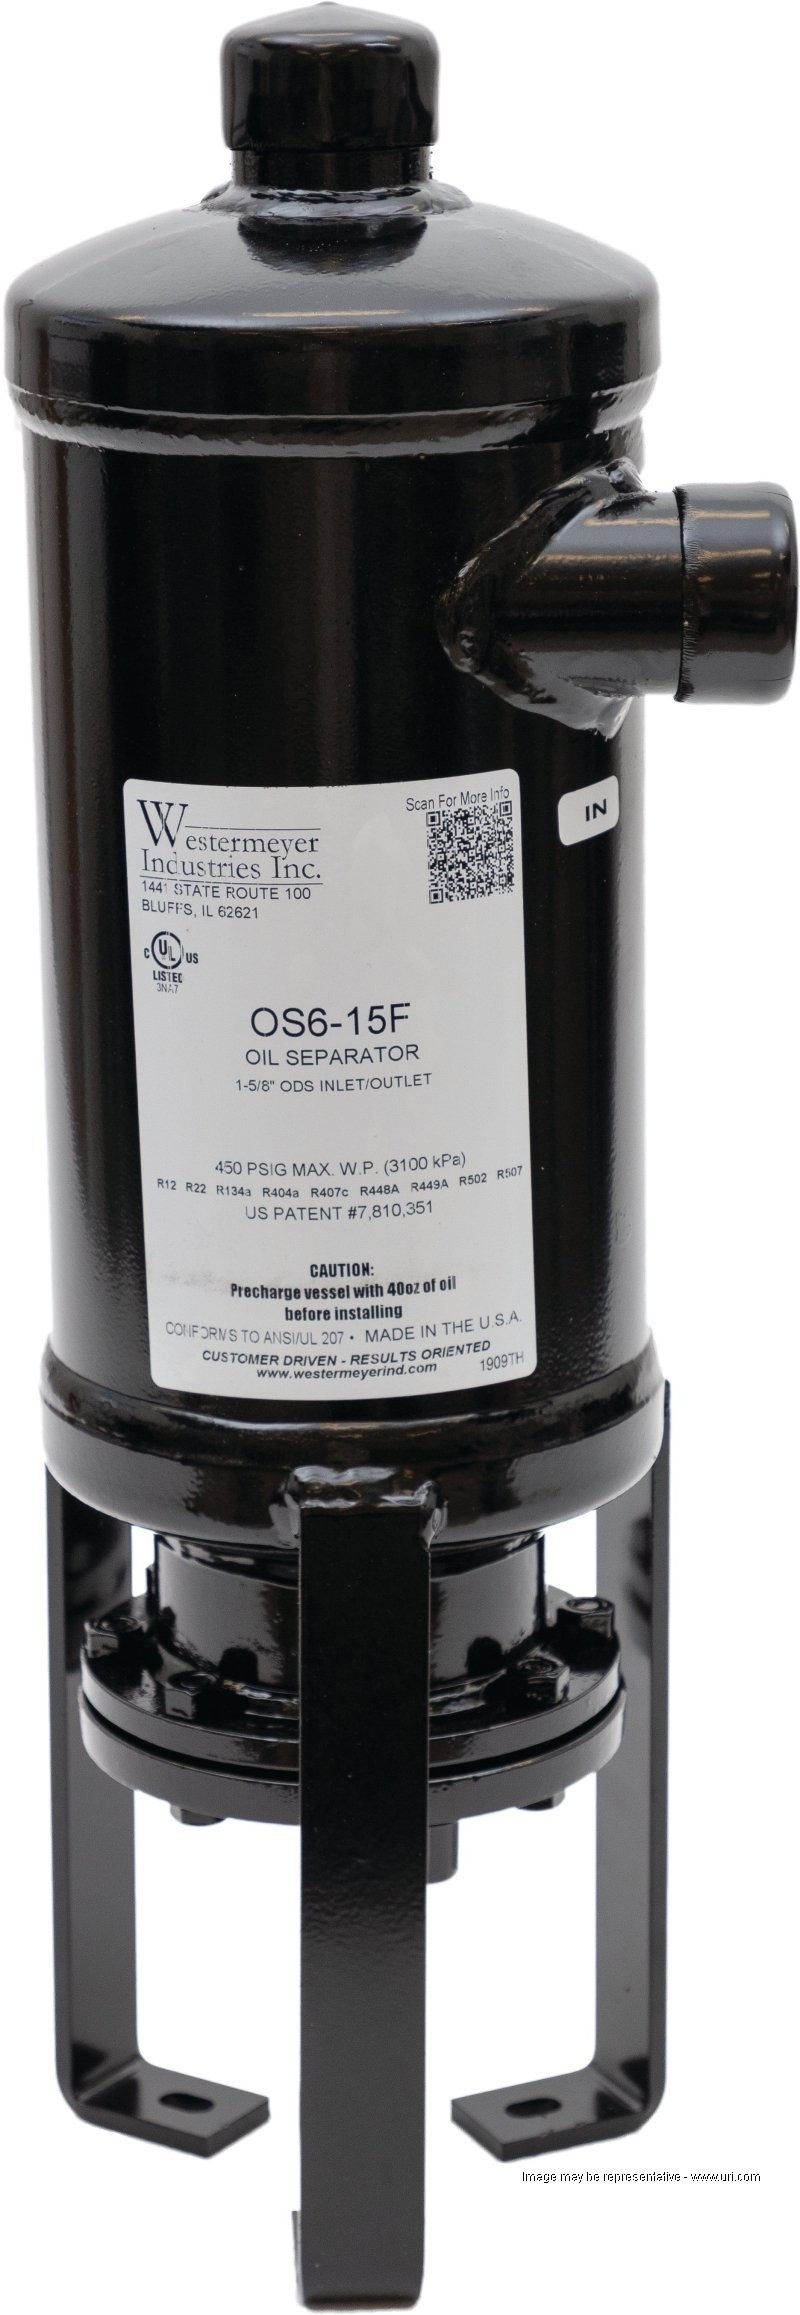 Oil separator PFOS-40CF - Samsys - innovative, intelligent, precise